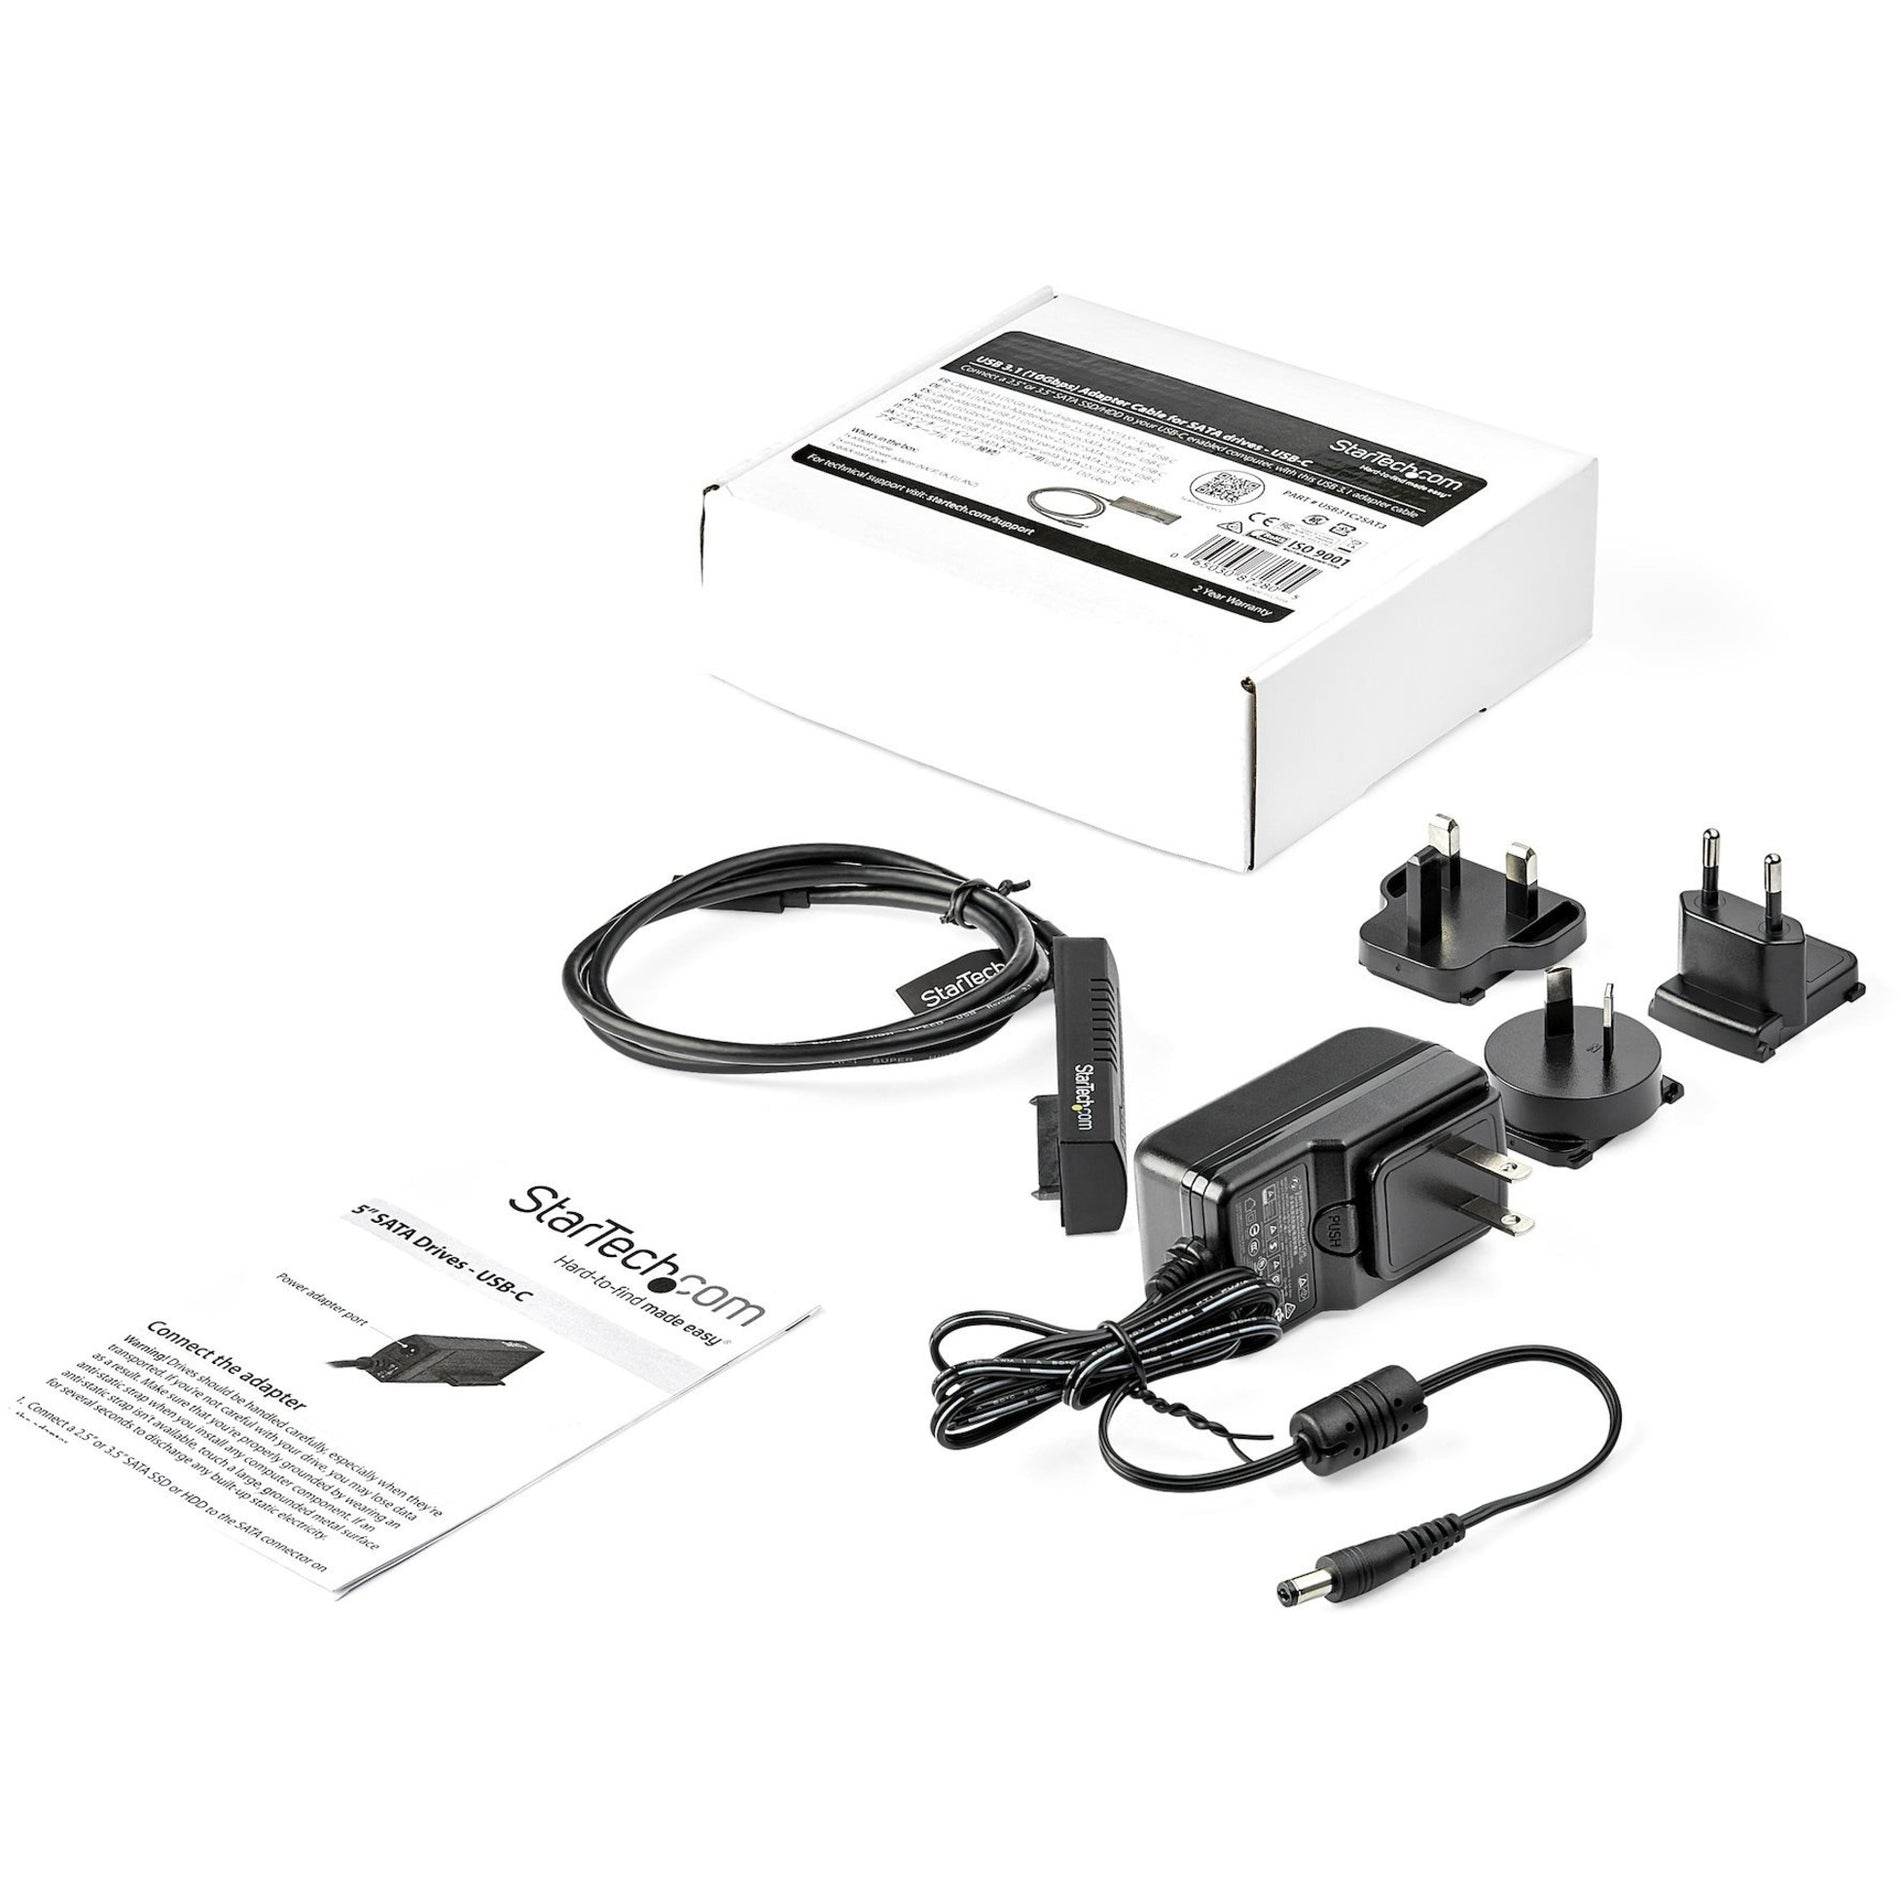 StarTech.com USB31C2SAT3 USB C to SATA Adapter Cable for 2.5"/3.5" SSD/HDD Drives USB 3.1 (10Gbps) Hard Drive Adapter Cable  ブランド名：StarTech.com 部分的に翻訳された製品名：USB31C2SAT3 USB C to SATA アダプターケーブル 2.5"/3.5" SSD/HDD ドライブ用 USB 3.1 (10Gbps) ハードドライブアダプターケーブル